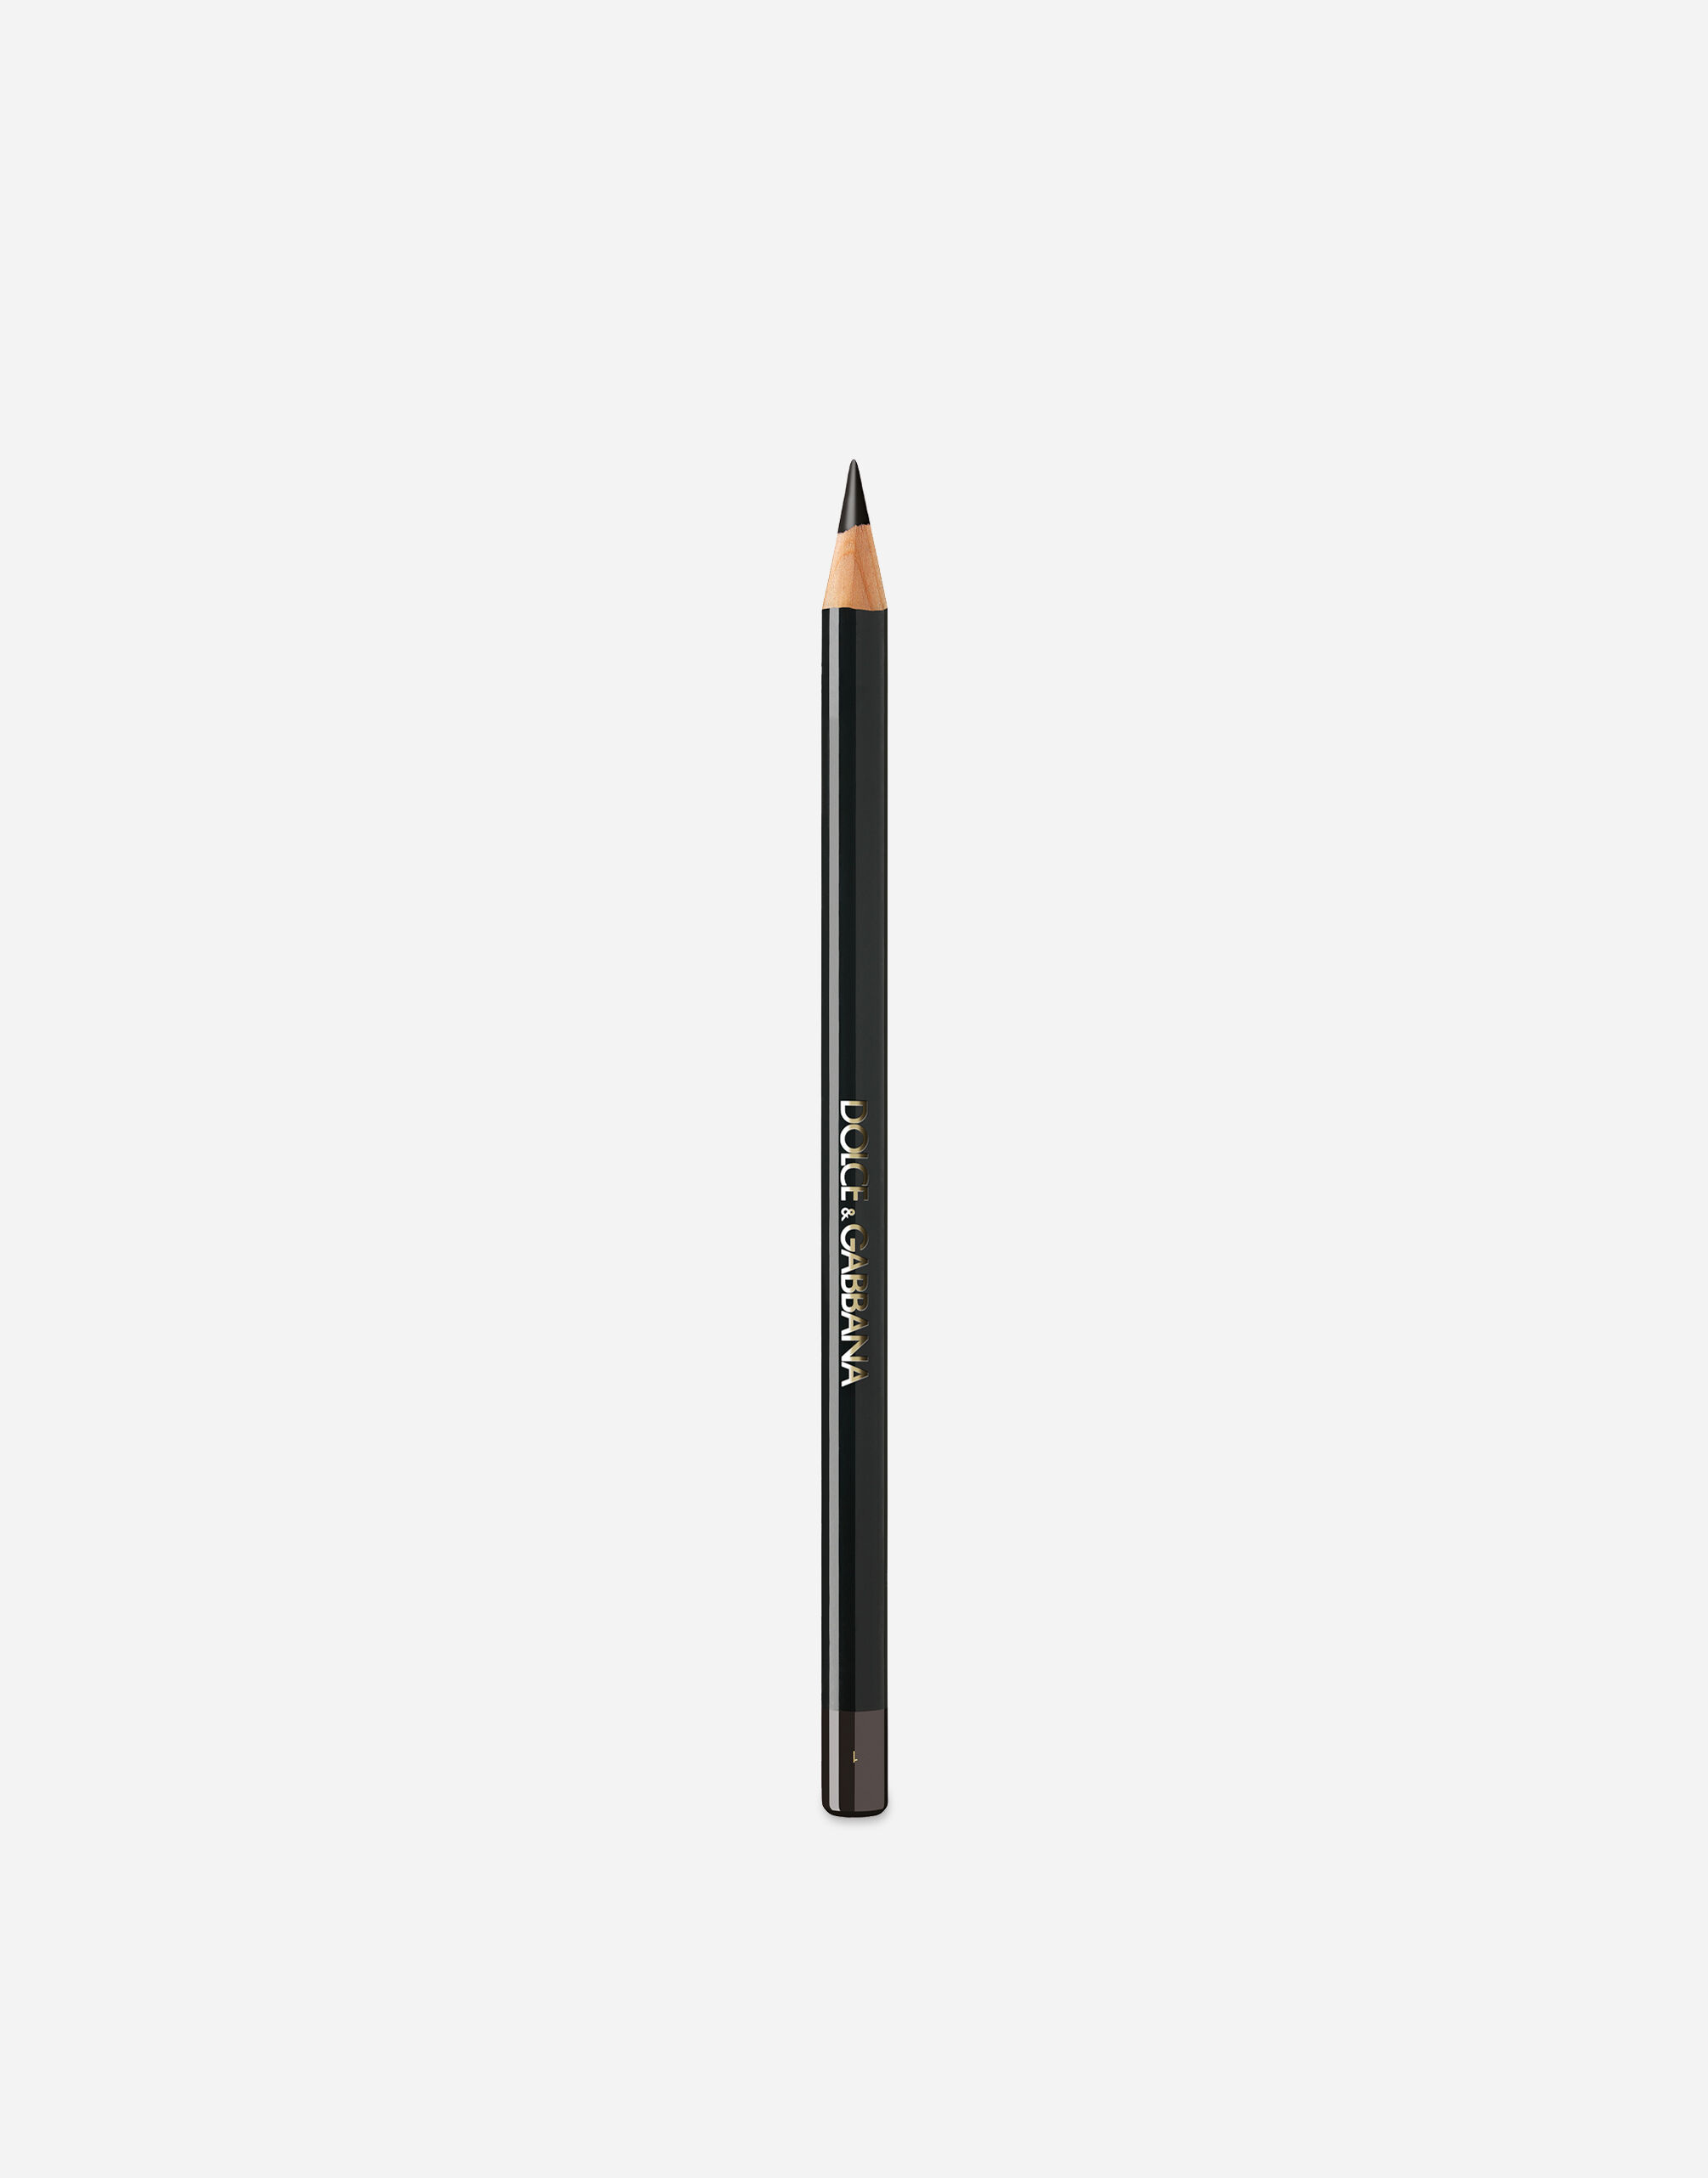 Карандаш-кайал для глаз DOLCE & GABBANA Khol Pencil стойкий, тон 1 True Black, 2,04 г карандаш для глаз shinewell charm pencil т 2 графитовый